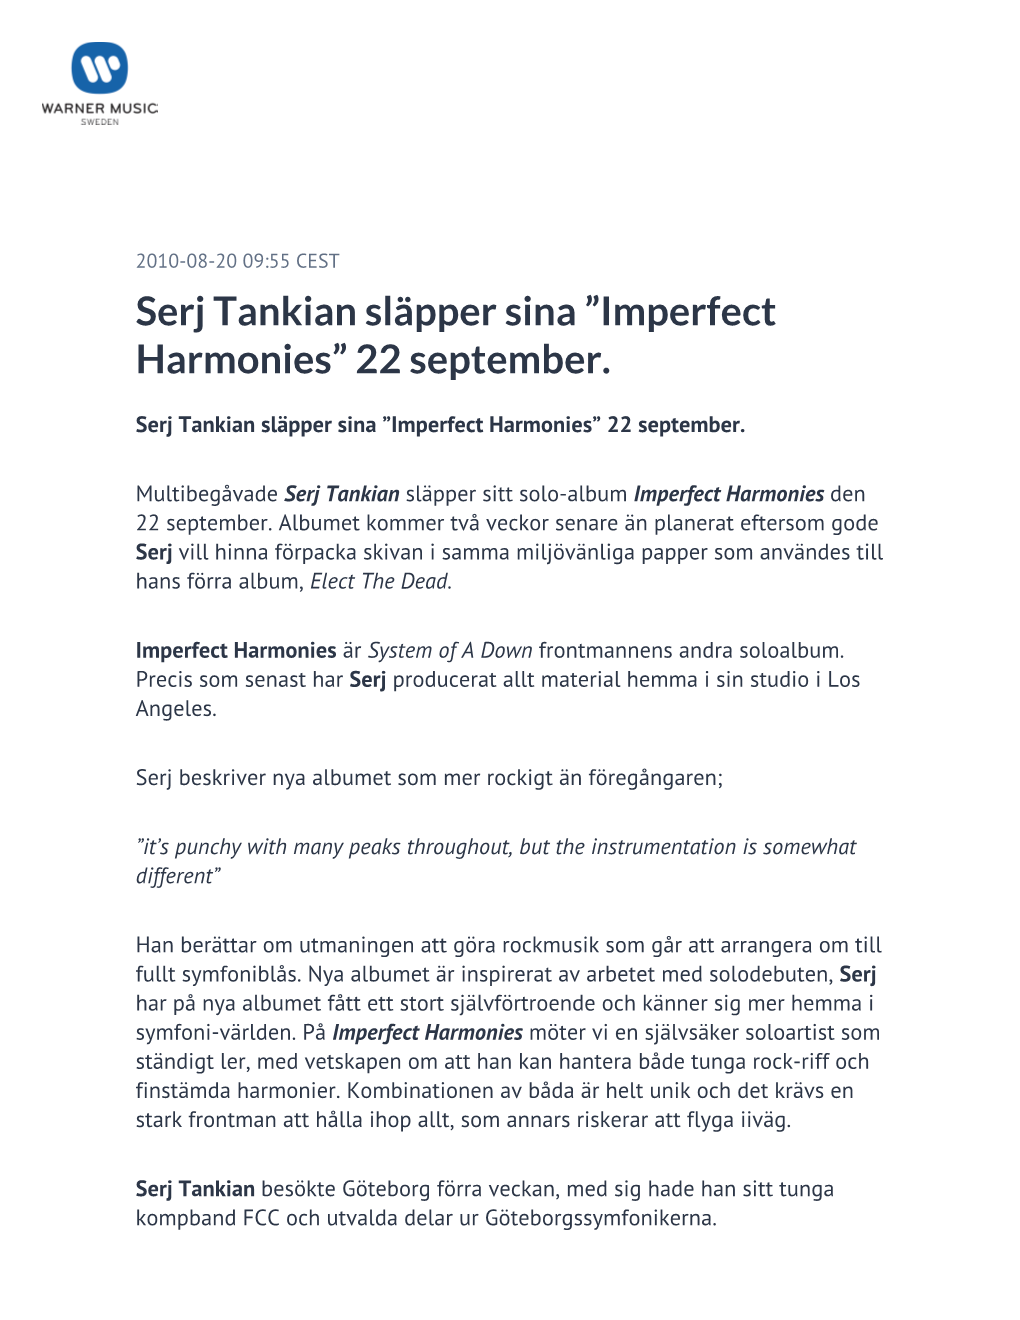 Serj Tankian Släpper Sina ”Imperfect Harmonies” 22 September